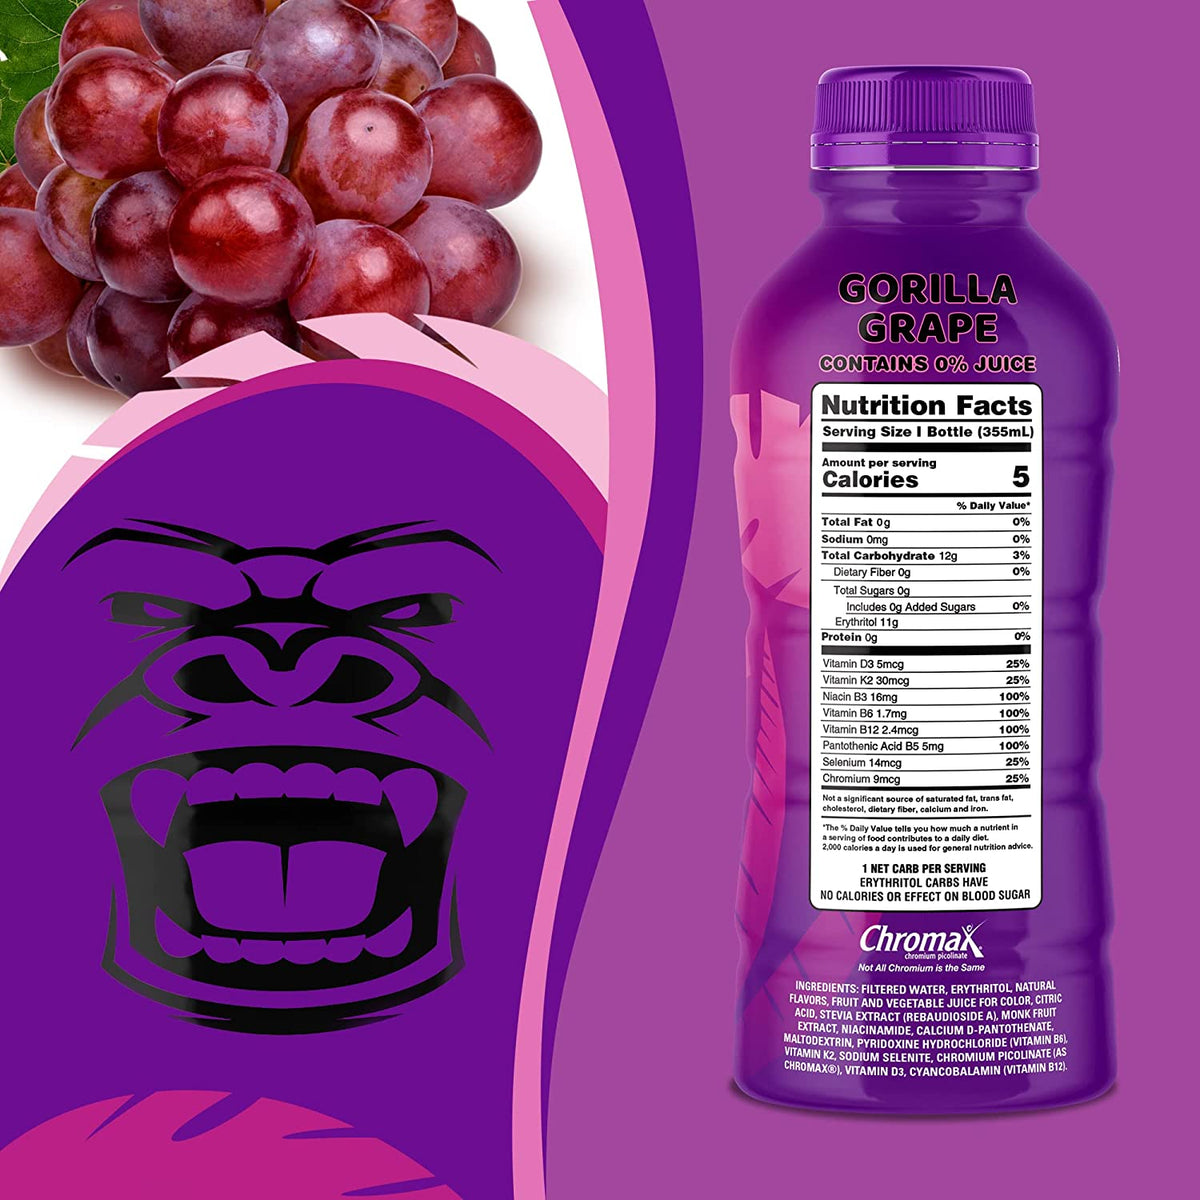 Vitamals Enhanced Flavored Water - Gorilla Grape - 12 fl oz (Pack of 6)